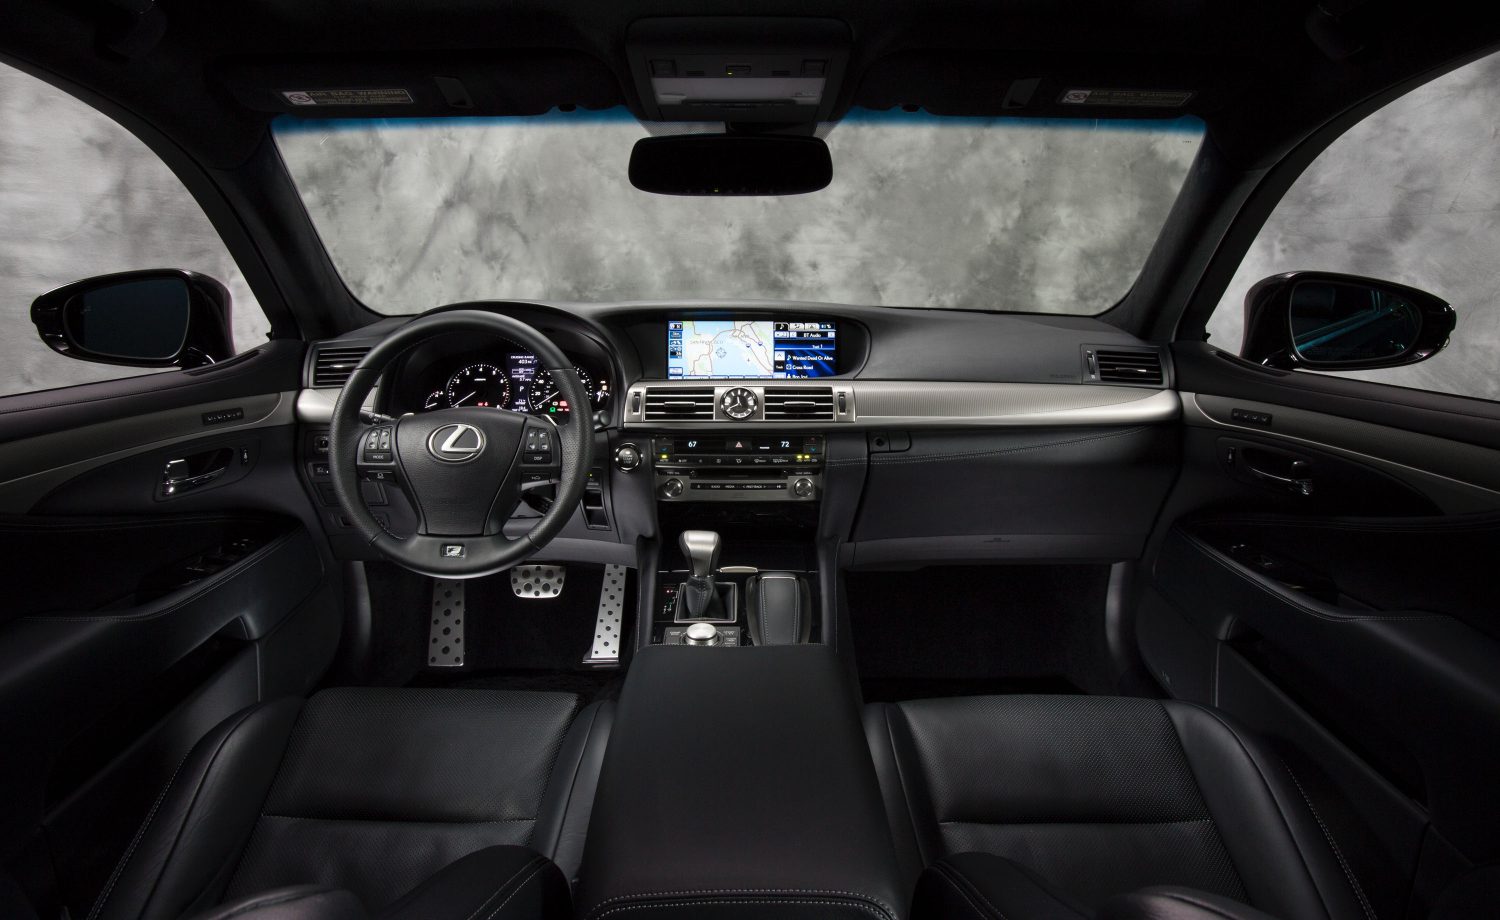 2013 - 2017 Lexus LS 460 F SPORT Interior 005 - Lexus USA Newsroom